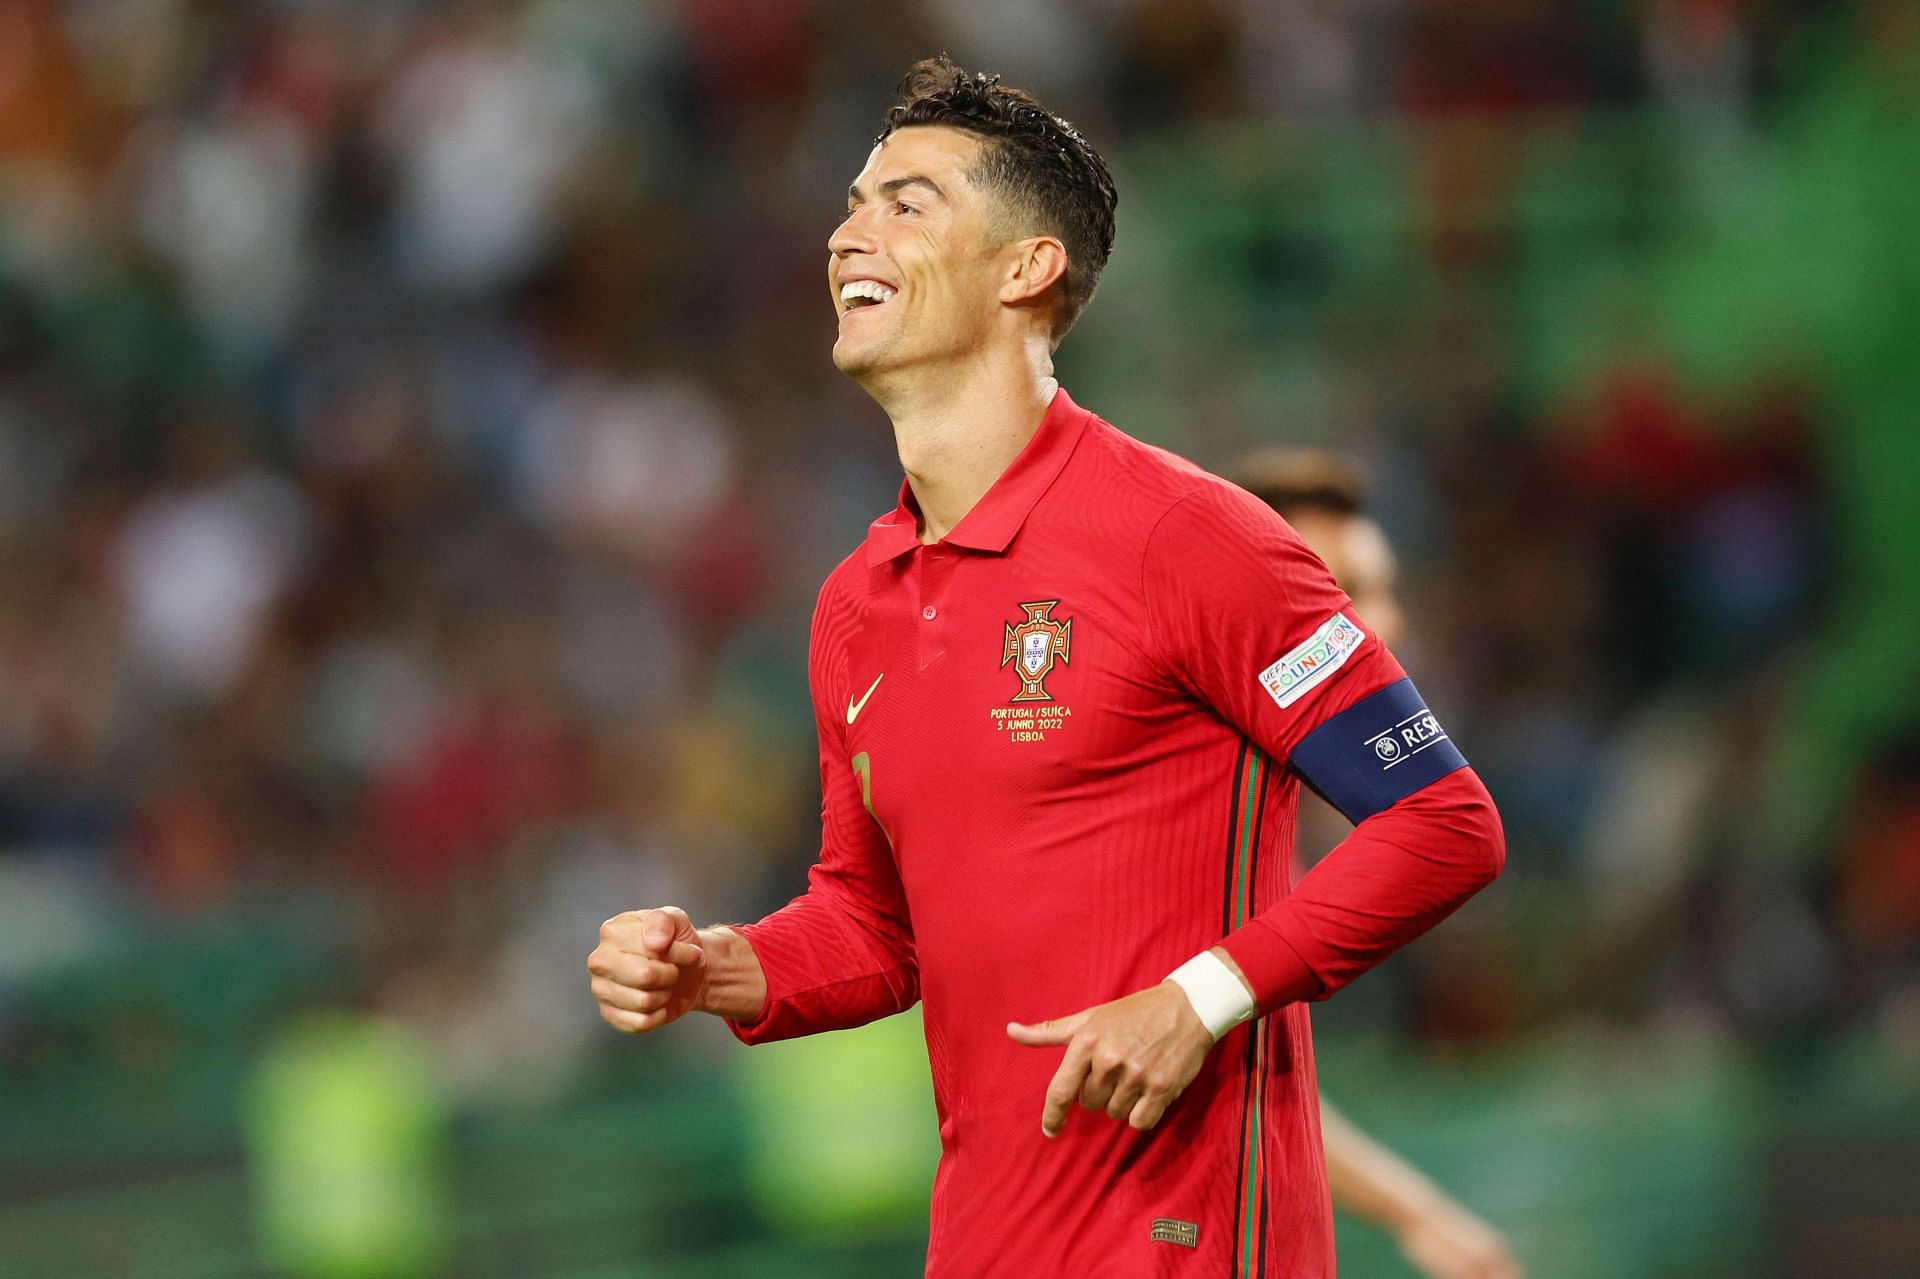 Cristiano Ronaldo scored a brace against Switzerland